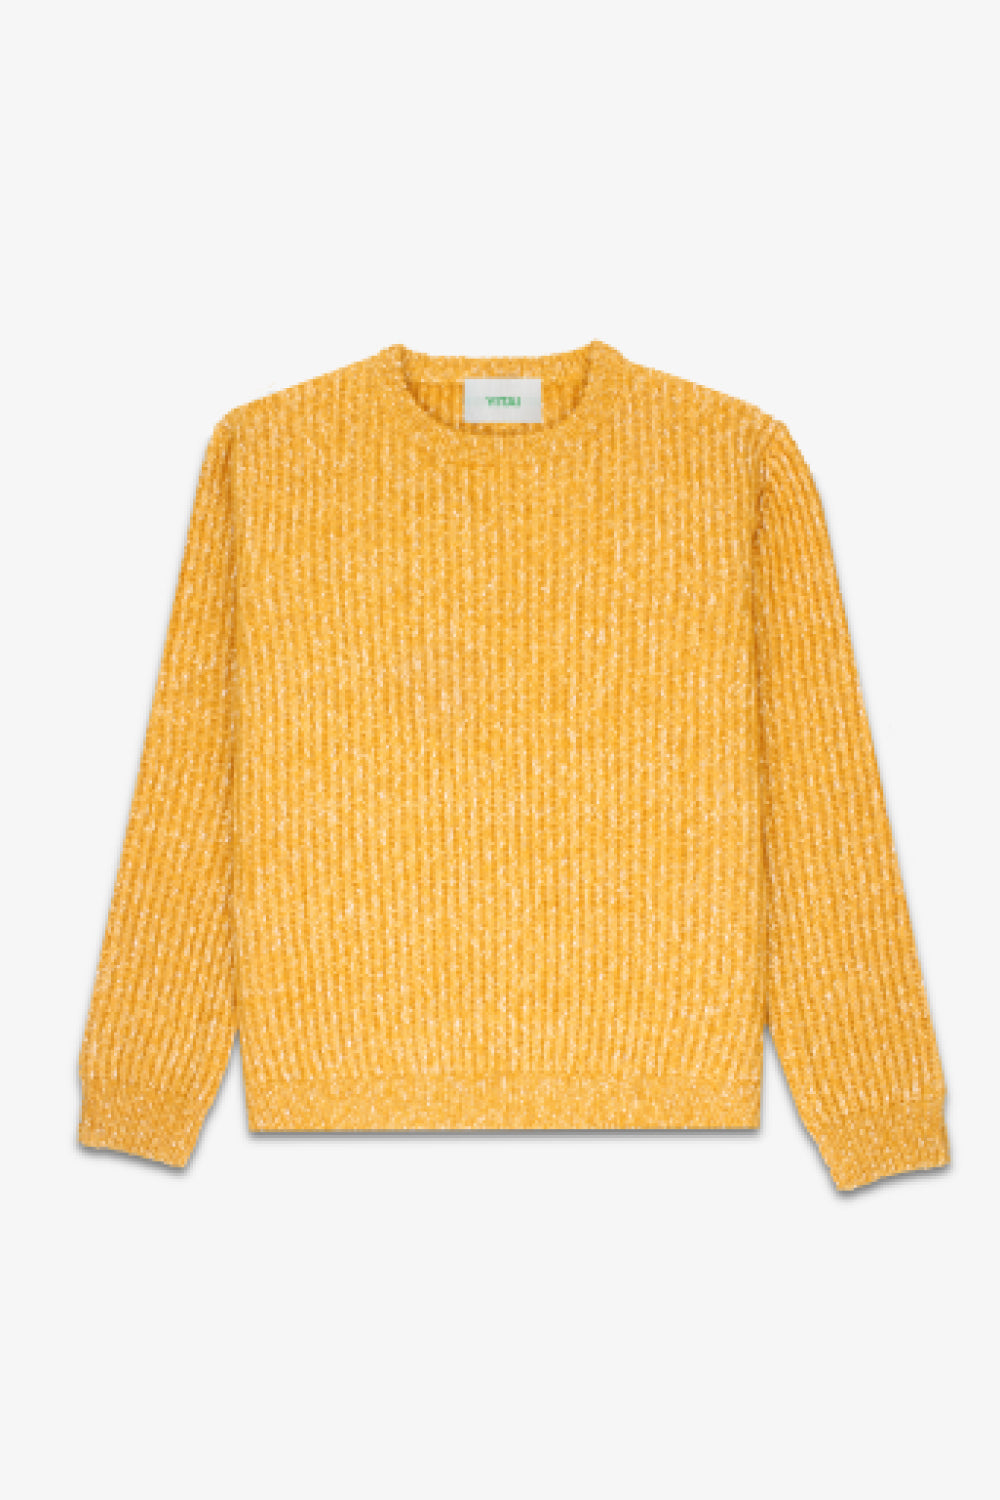 Marigold Fuzz Sweater